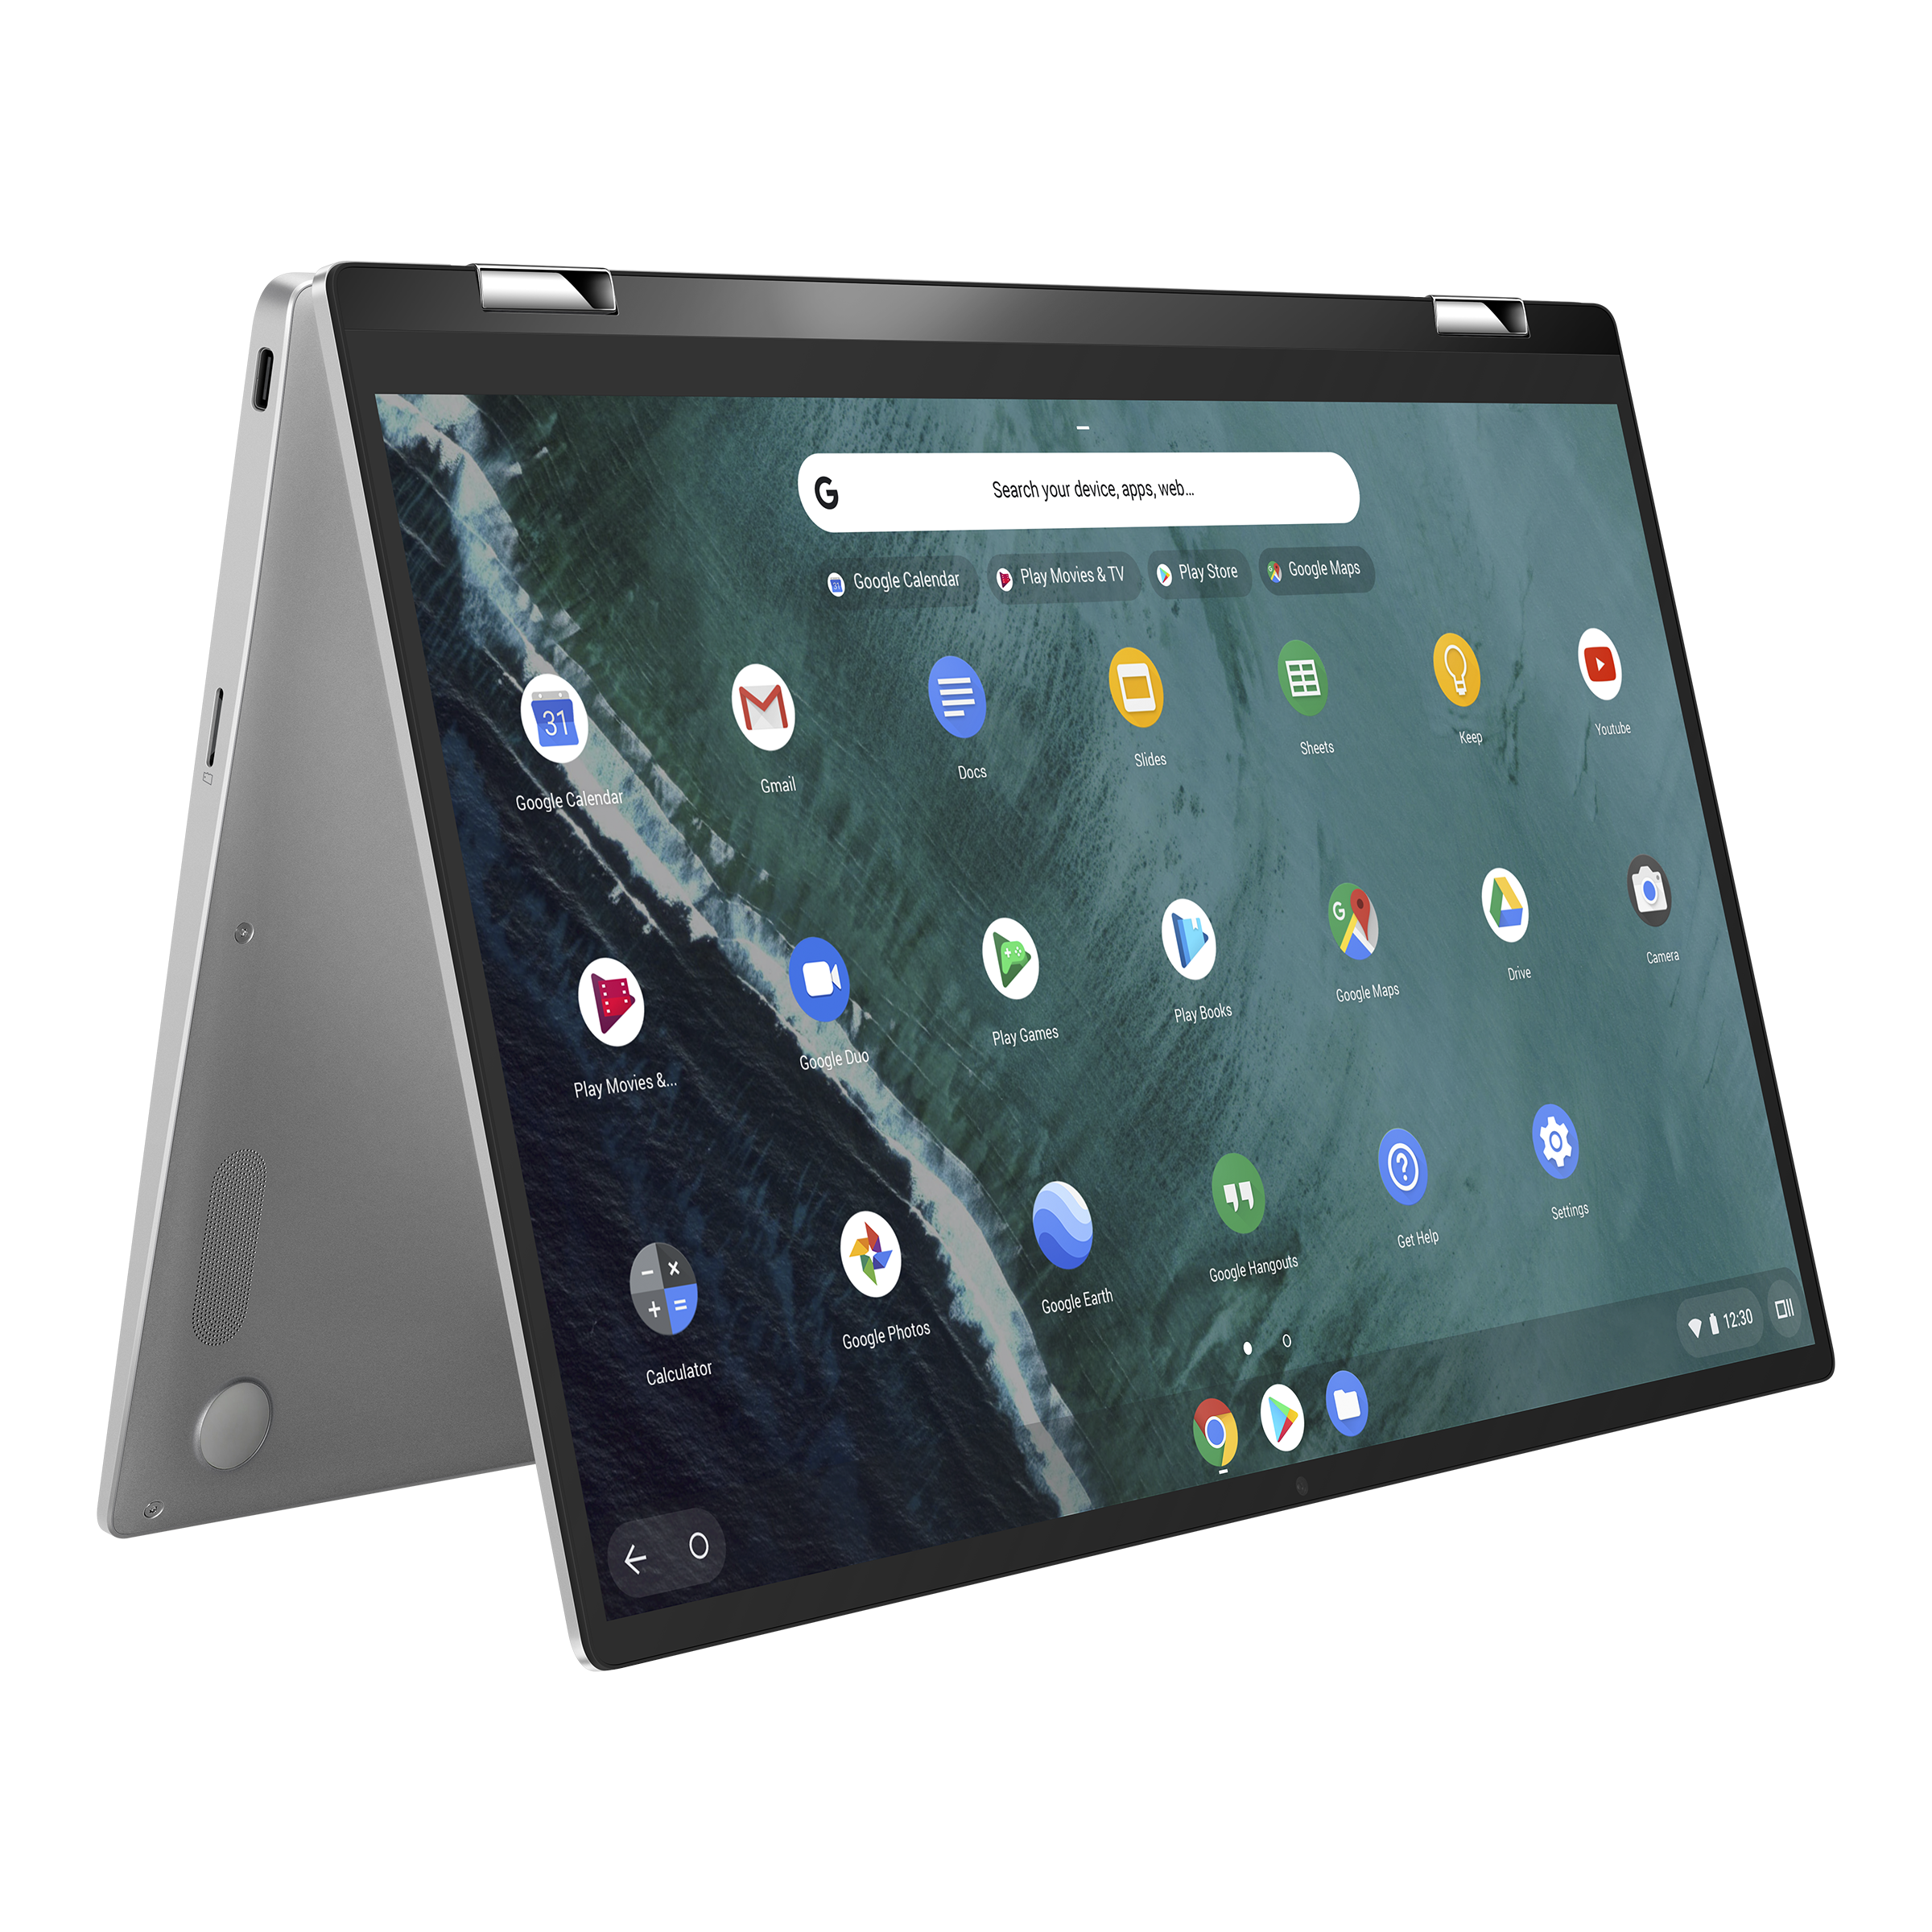 ASUS Chromebook Flip C434｜Laptops For Home｜ASUS Global